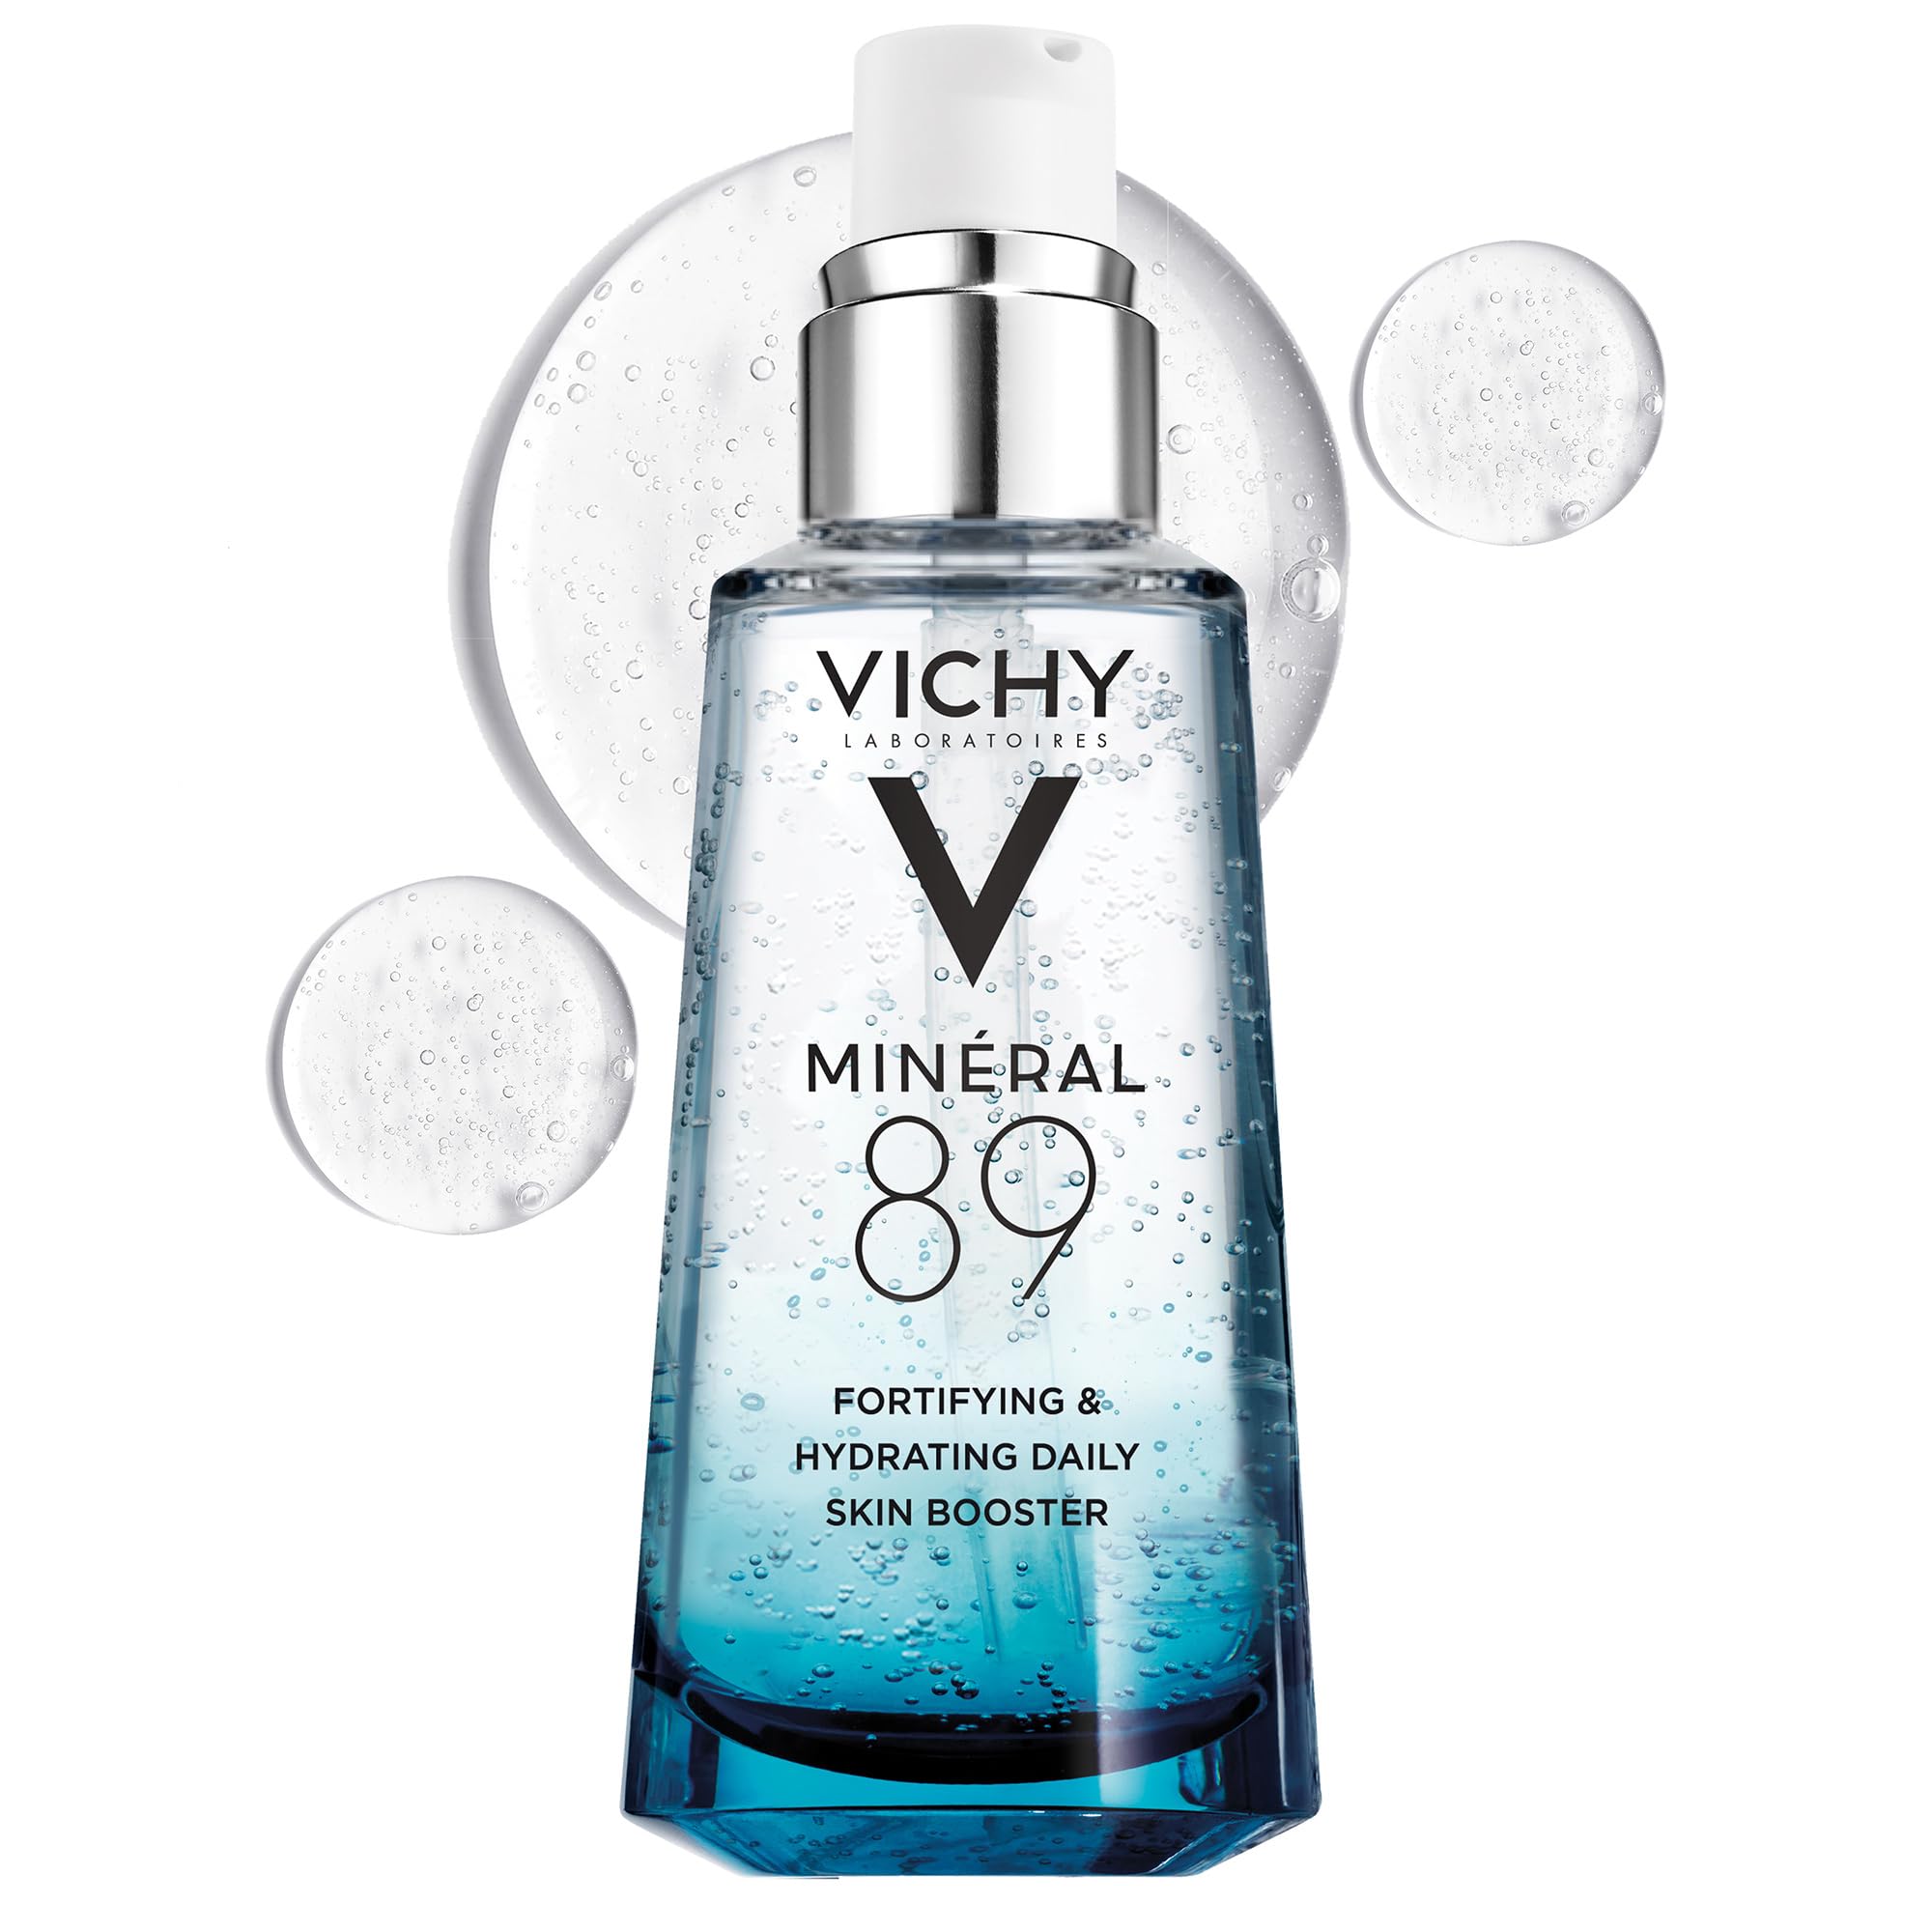 Vichy ミネラル89フェイスセラム |敏感肌と乾燥肌のためのフェイシャル ジェル モイスチャライザーとピュ...